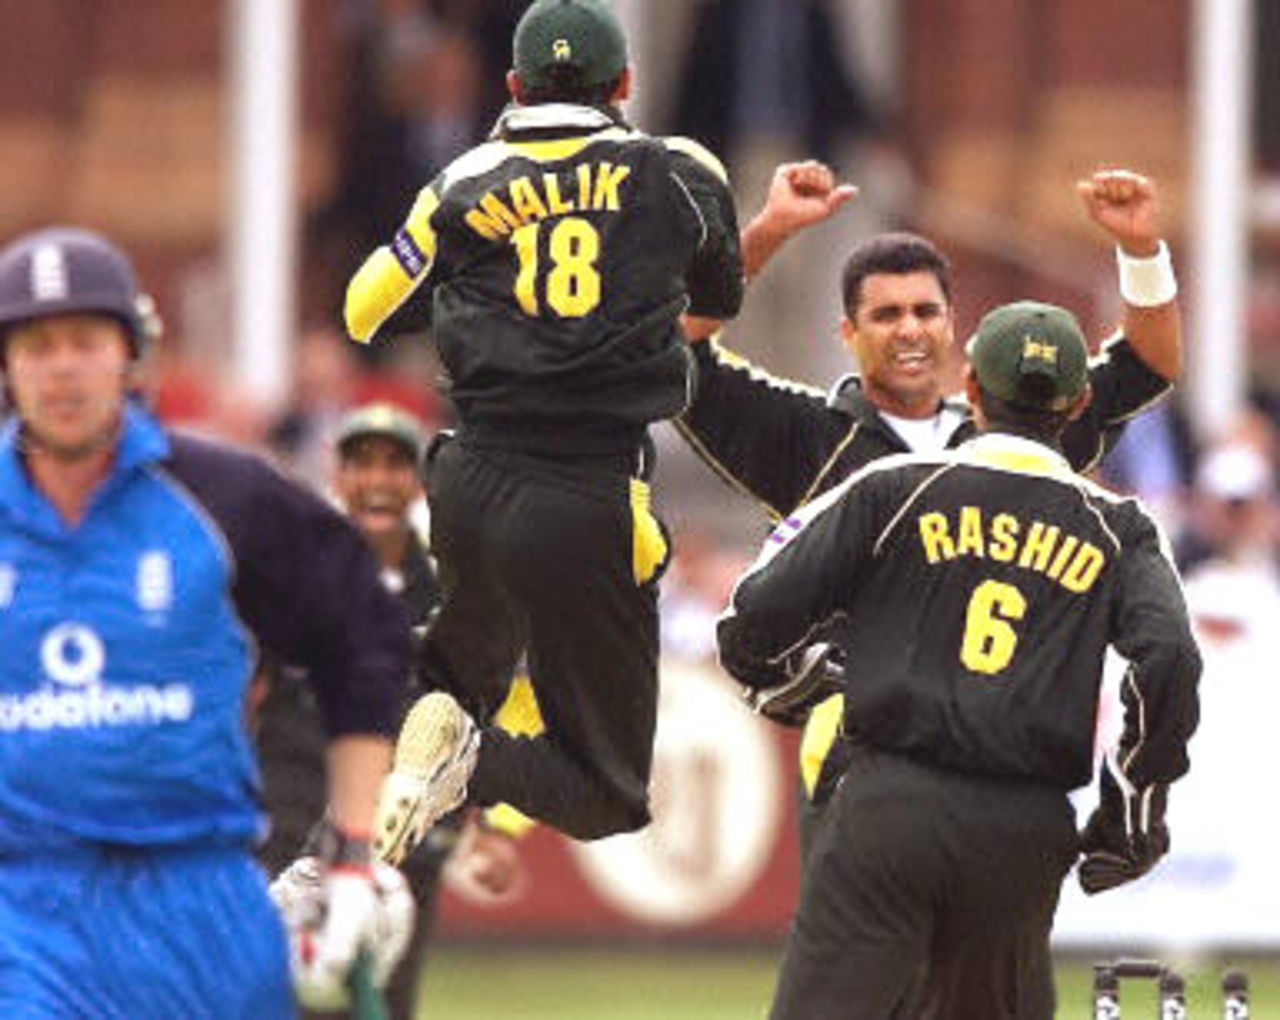 Waqar Younis celebrates Knight's run out with Rashid Latif and Shoaib Malik, 4th ODI at Lords, 12 June 2001.